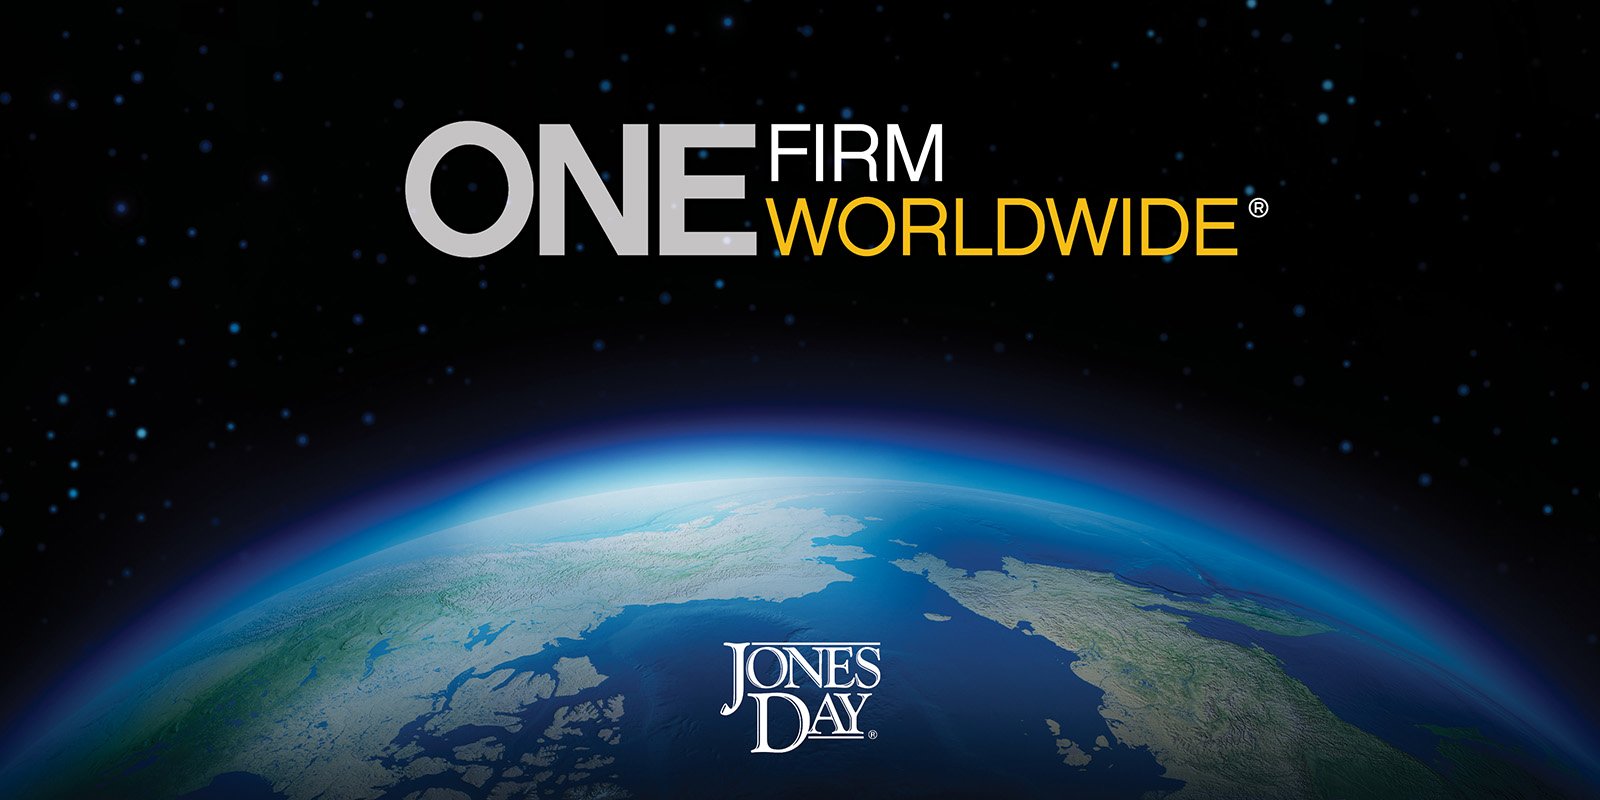 One Firm Worldwide